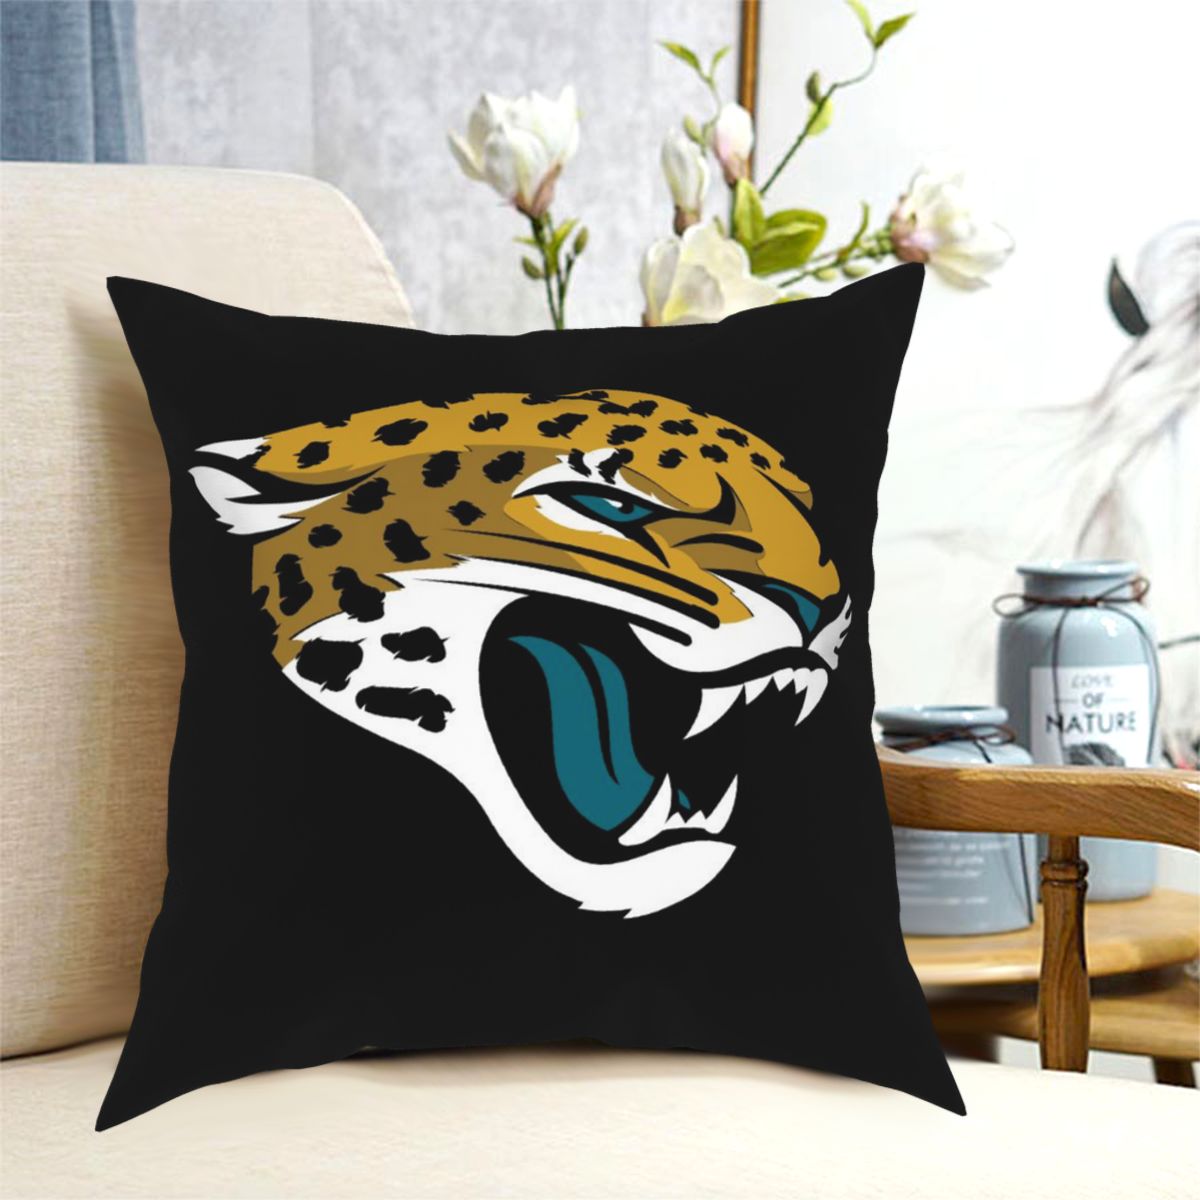 Custom Decorative Football Pillow Case Jacksonville Jaguars Black Pillowcase Personalized Throw Pillow Covers